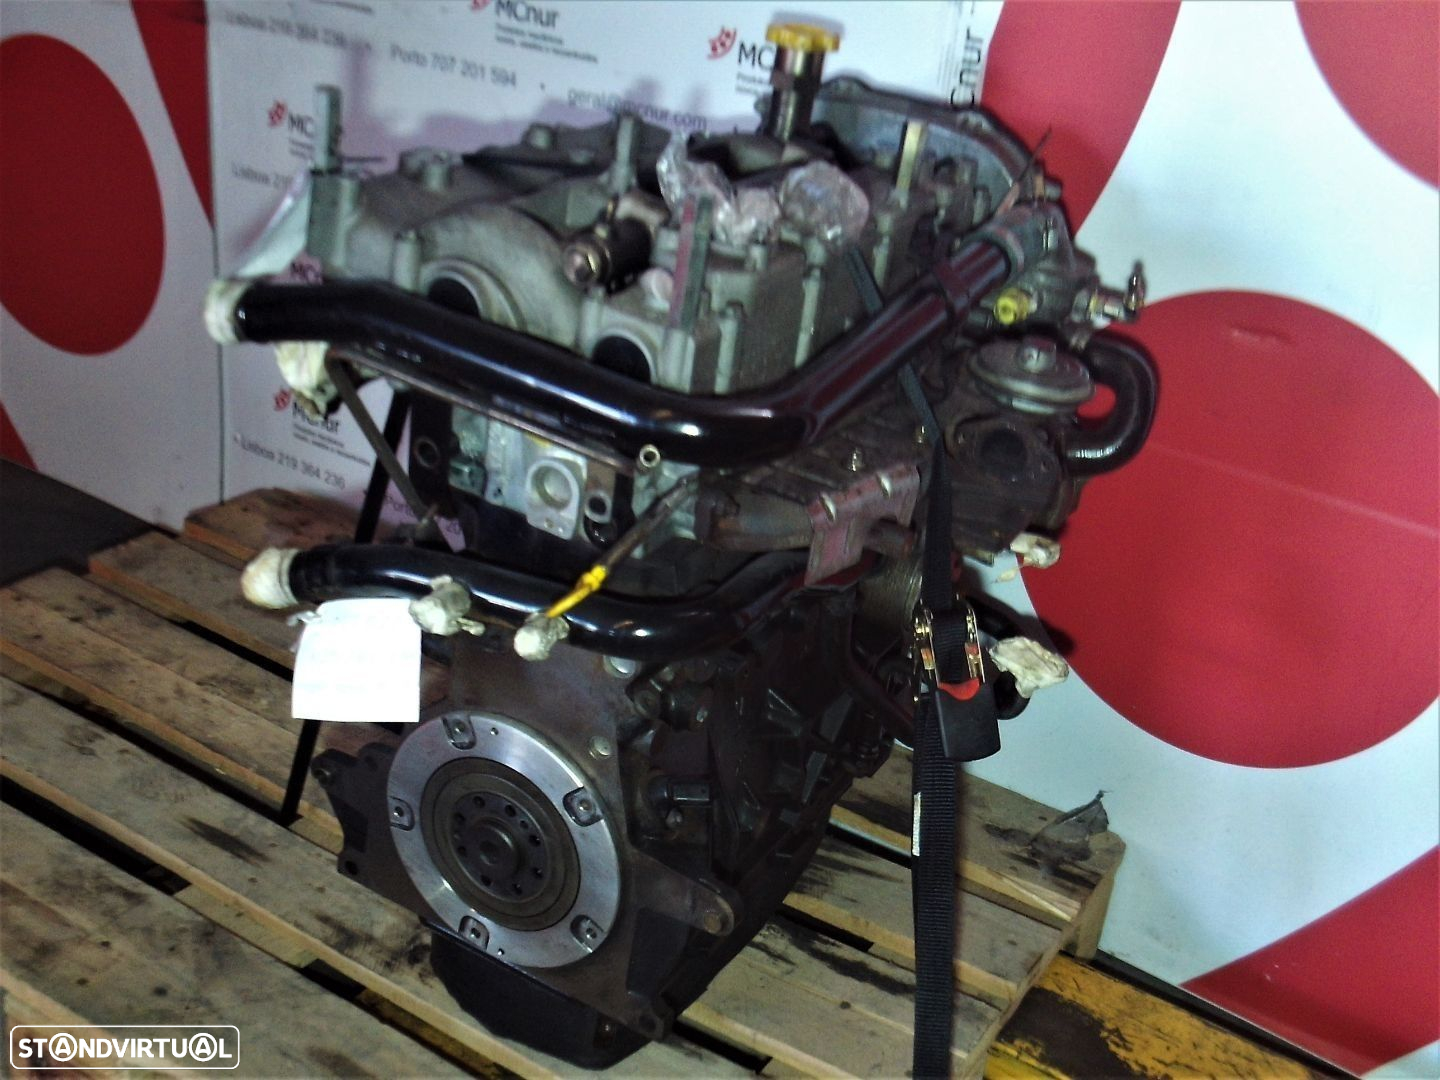 Motor completo Chrysler Voyager  Ref R2516C/ENC    ᗰᑕᑎᑌᖇ | Produtos Mecânicos ®️ - 10